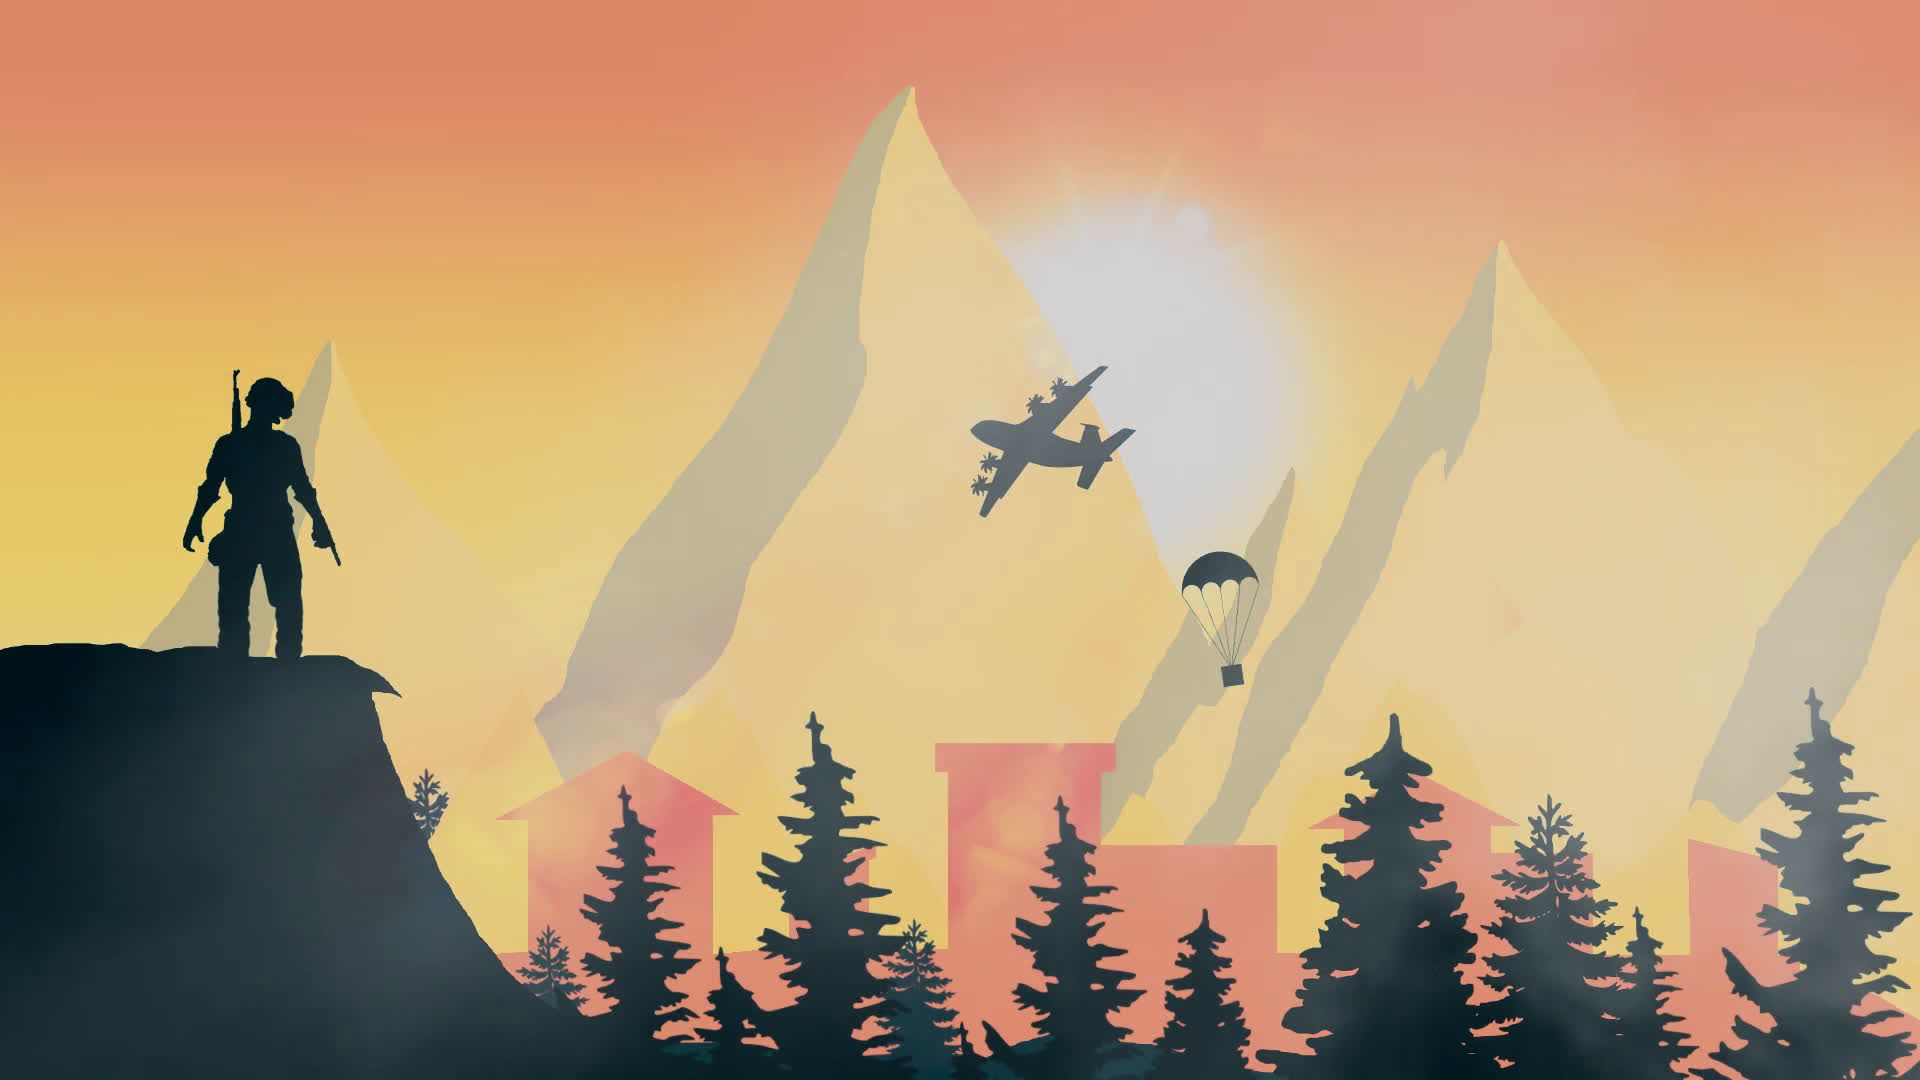 4k gaming wallpaper,sky,tree,illustration,animation,fictional character